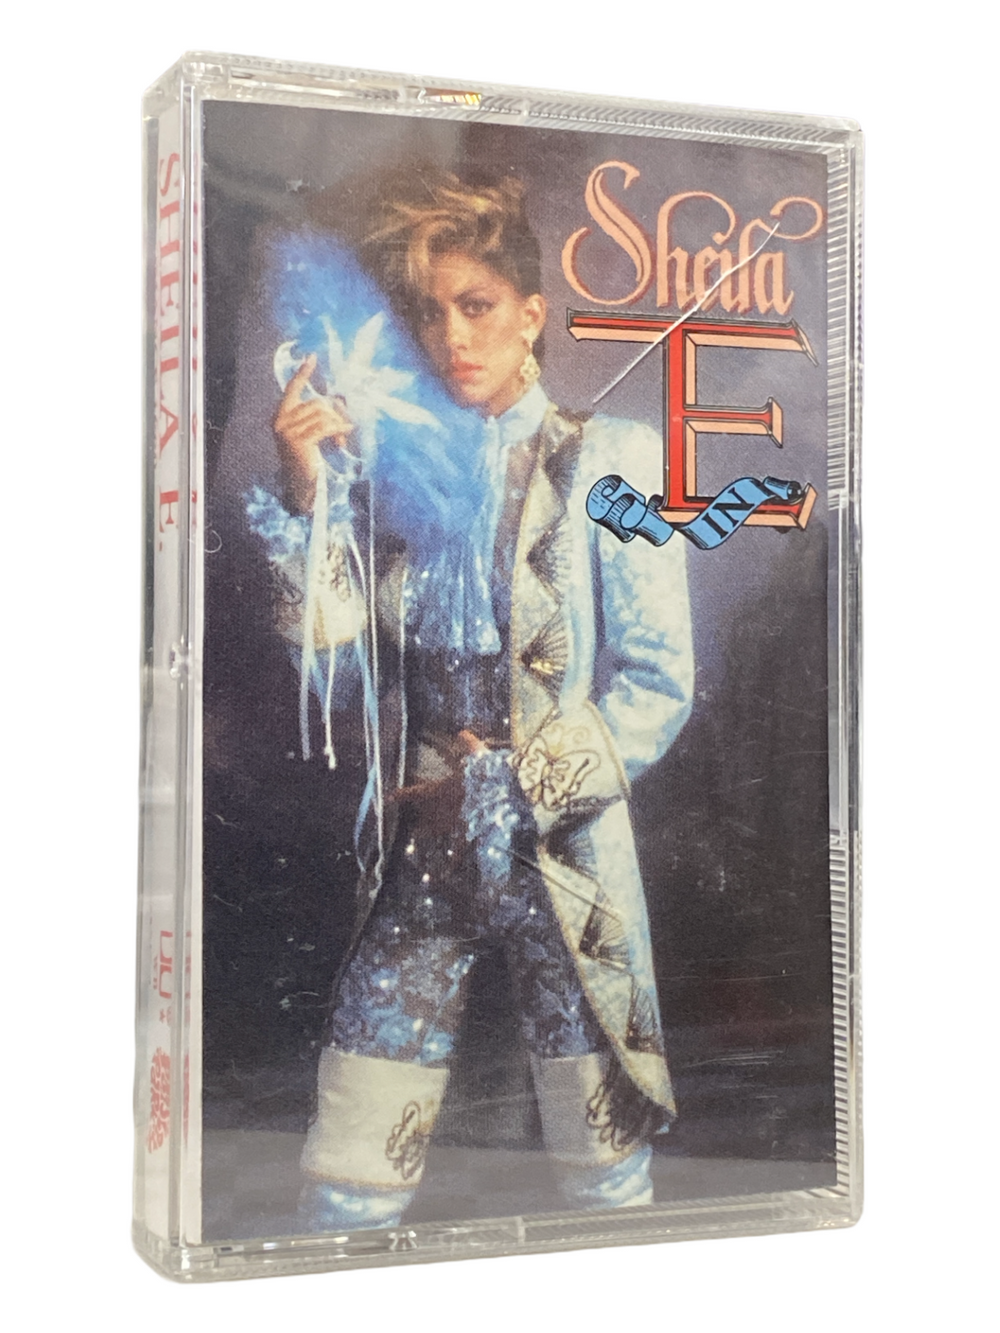 Prince – Sheila E In Romance 1600 Cassette Album EU preloved: 1984